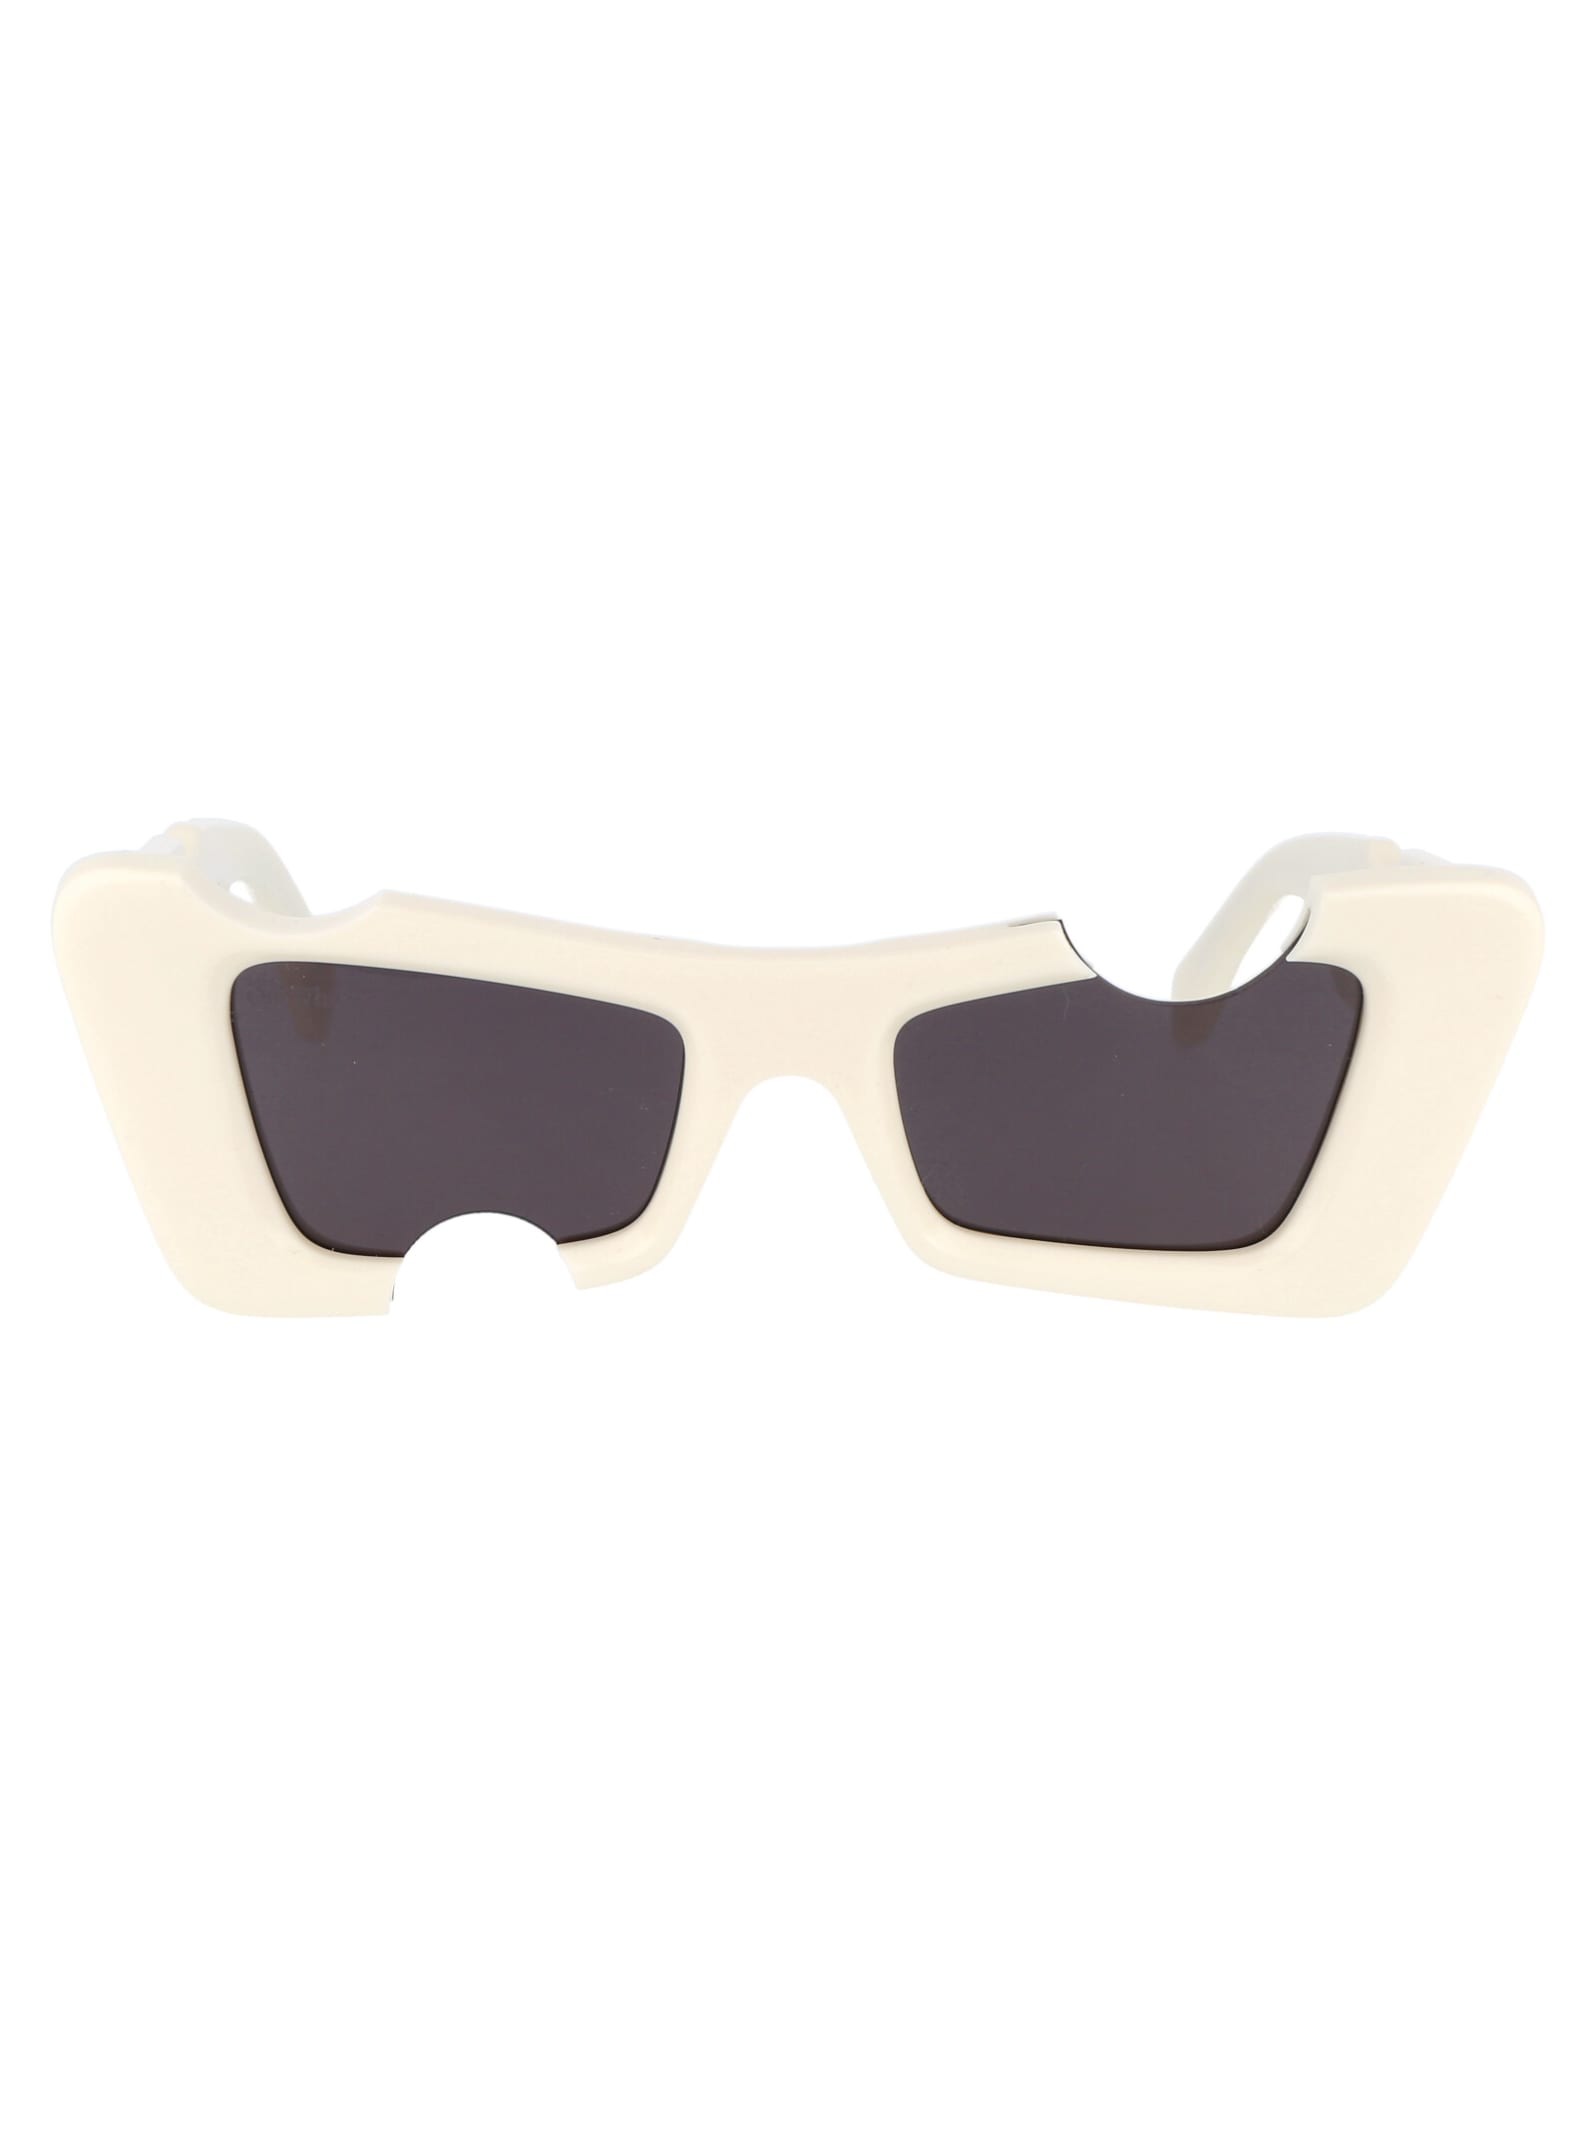 Off-White Cannes Sunglasses